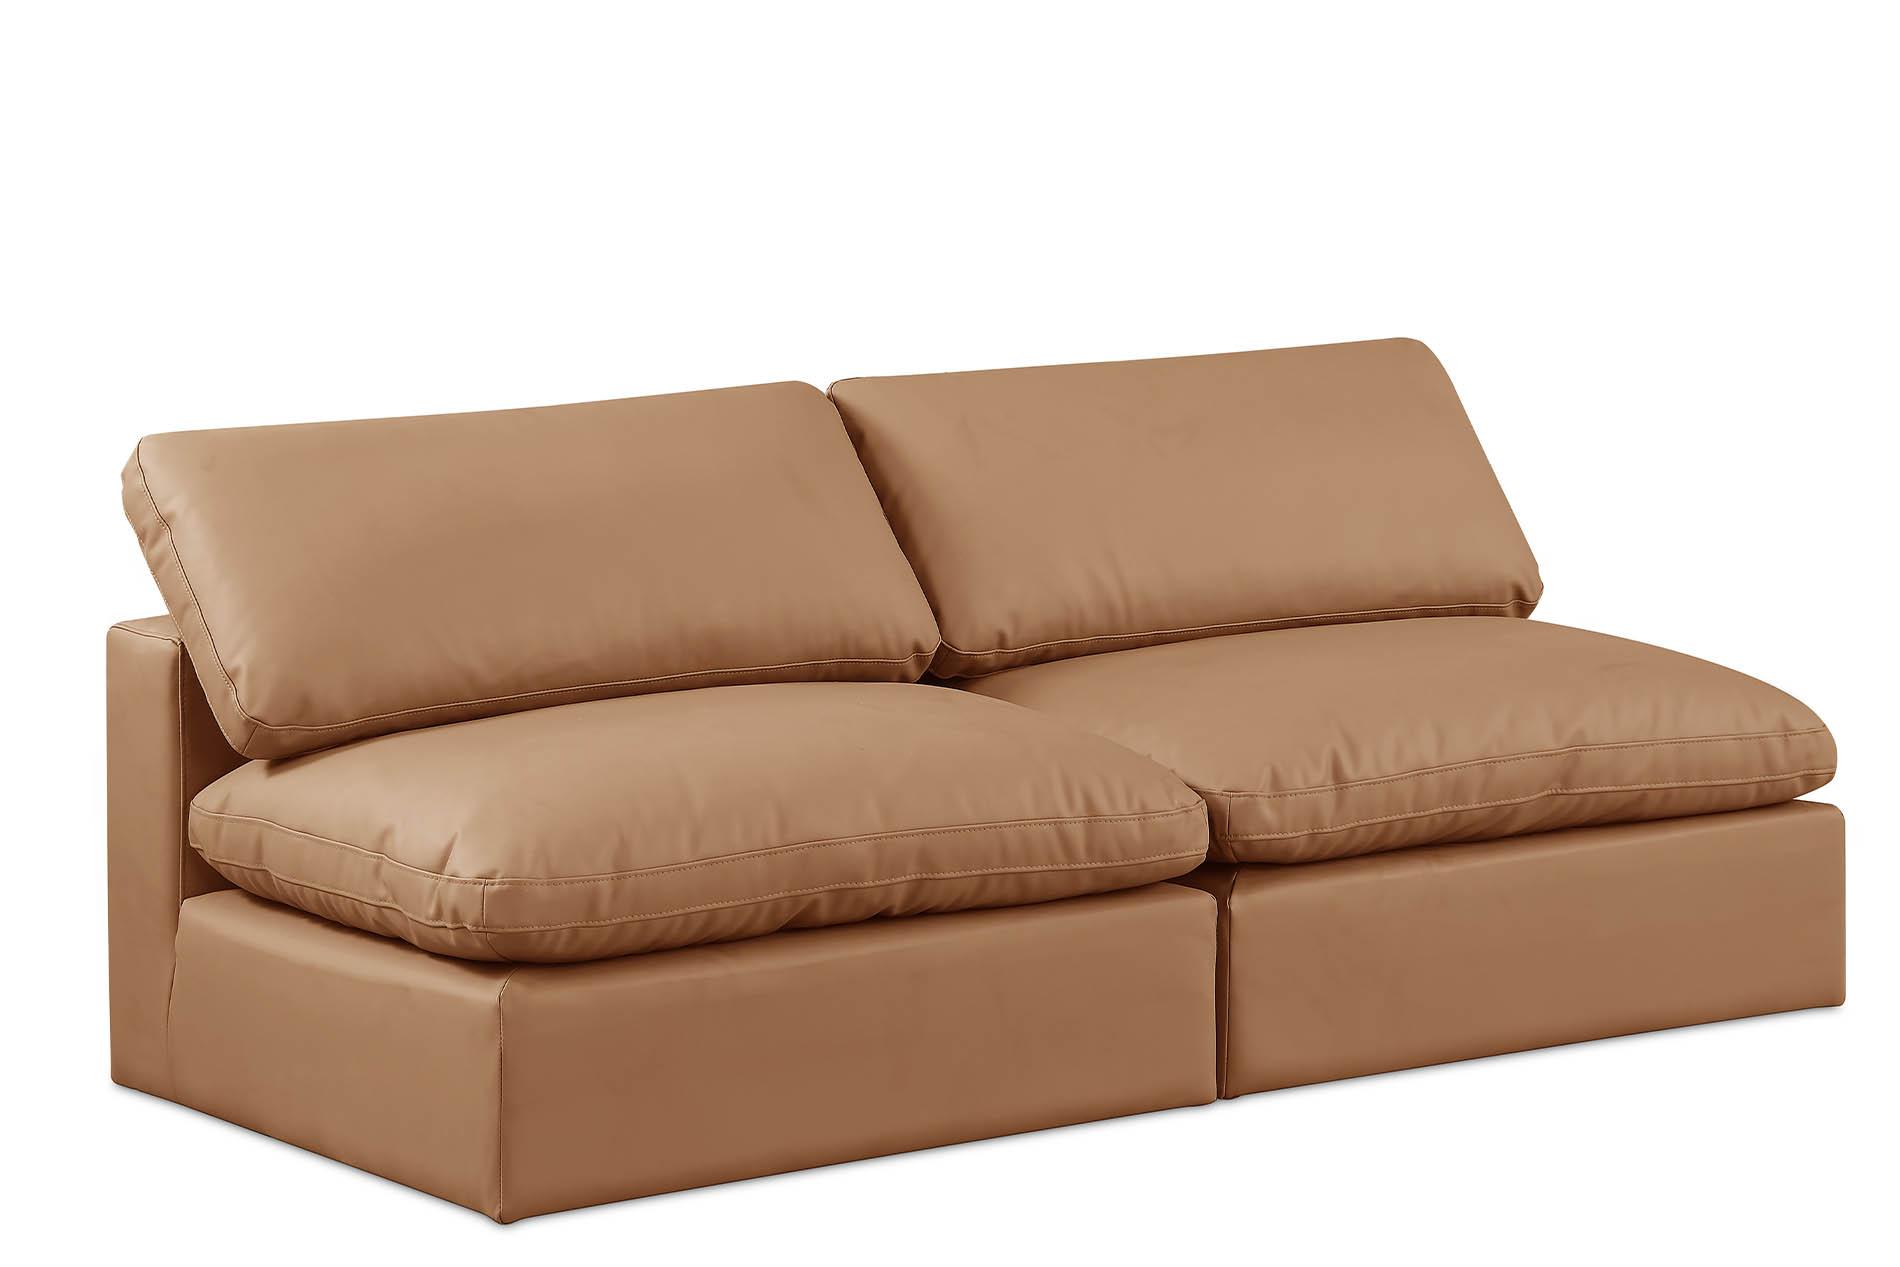 Contemporary, Modern Modular Sofa 188Cognac-S78 188Cognac-S78 in Cognac Faux Leather